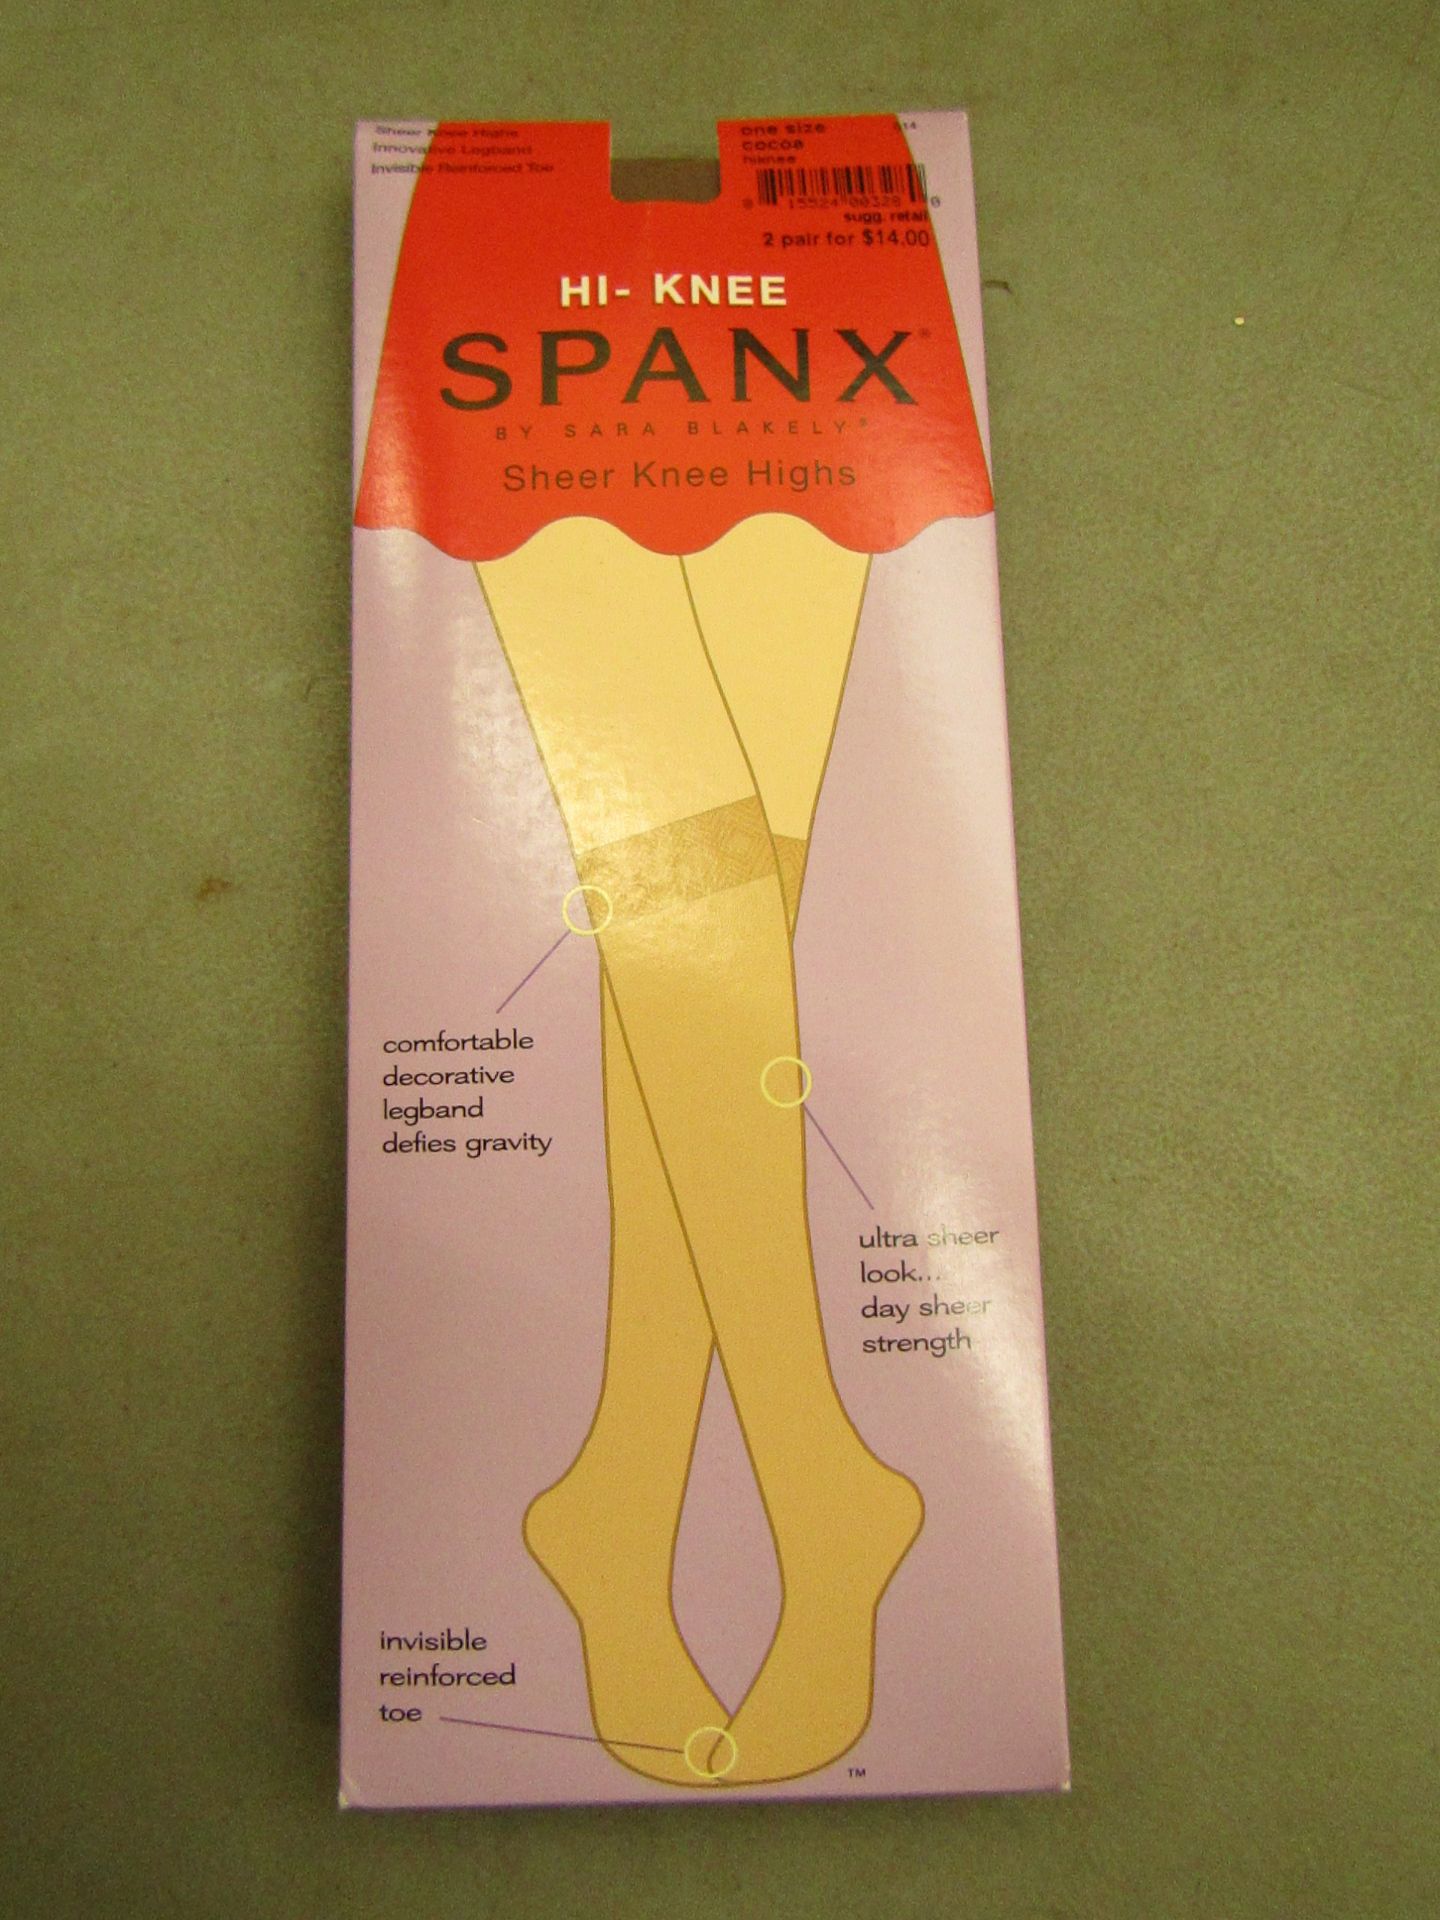 3 packs Spanx by Sara Blackely HI-Knee Sheer Socks Cocoa one size 2 pairs per pack RRP £8 each on